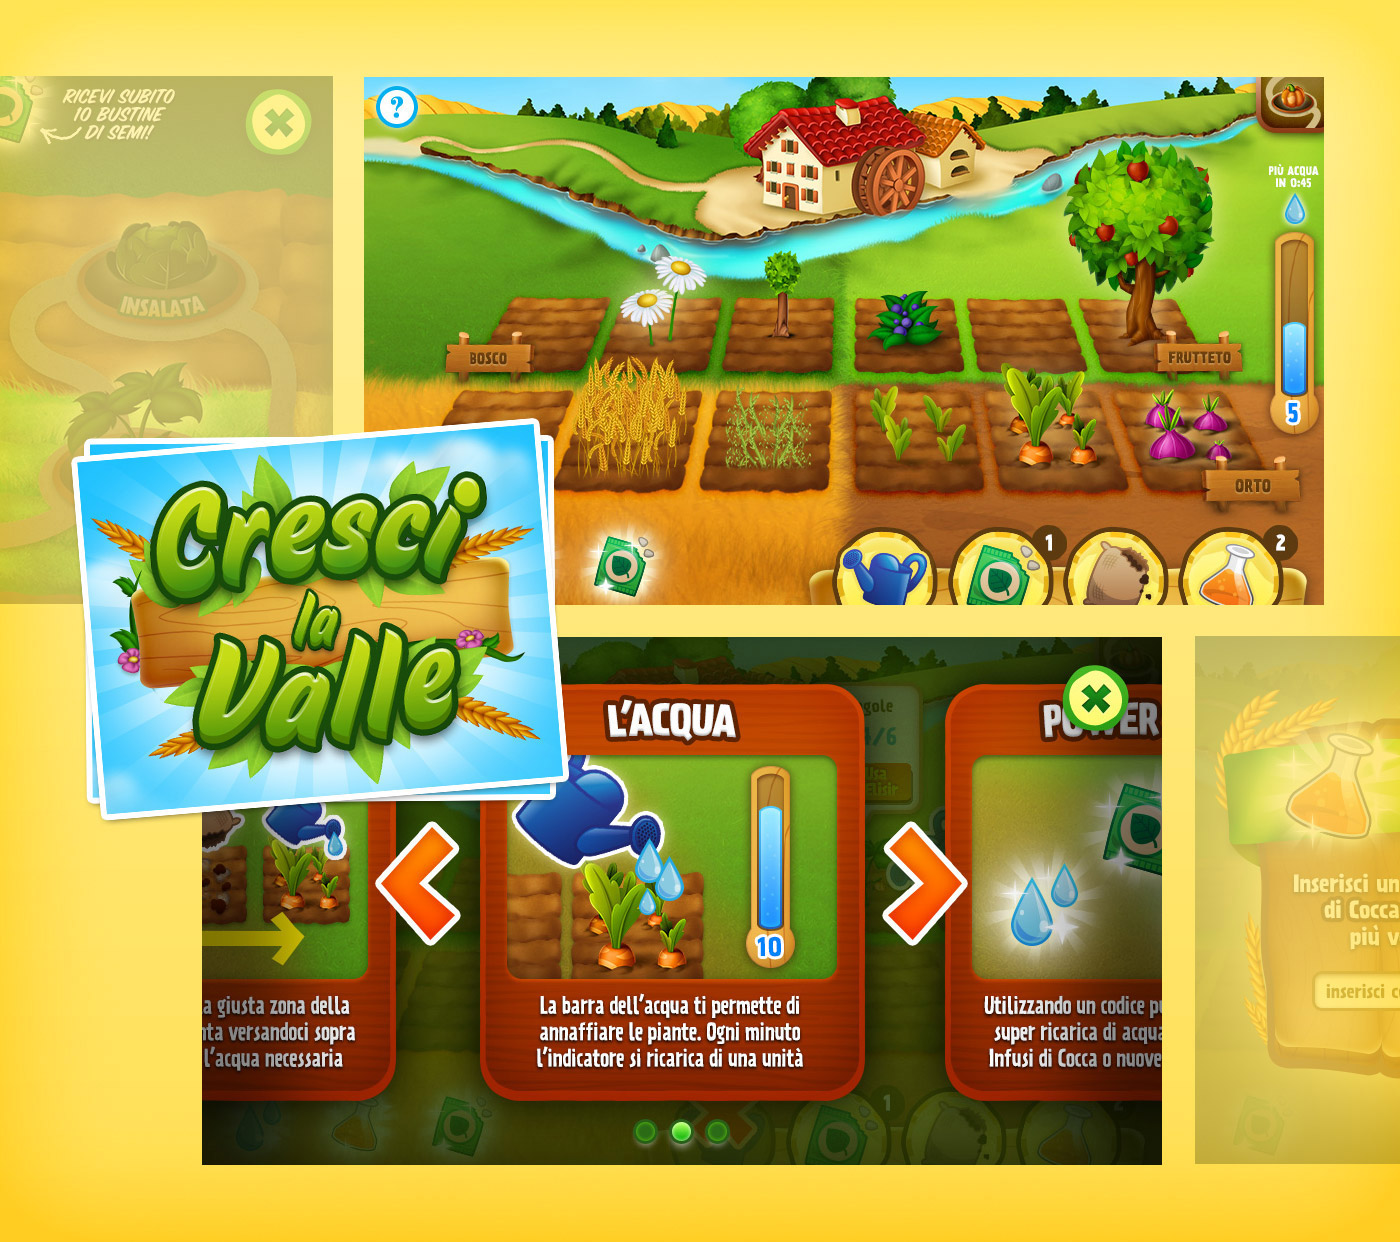 kids Website Games HTML5 GAMES  barilla Videogames parallax